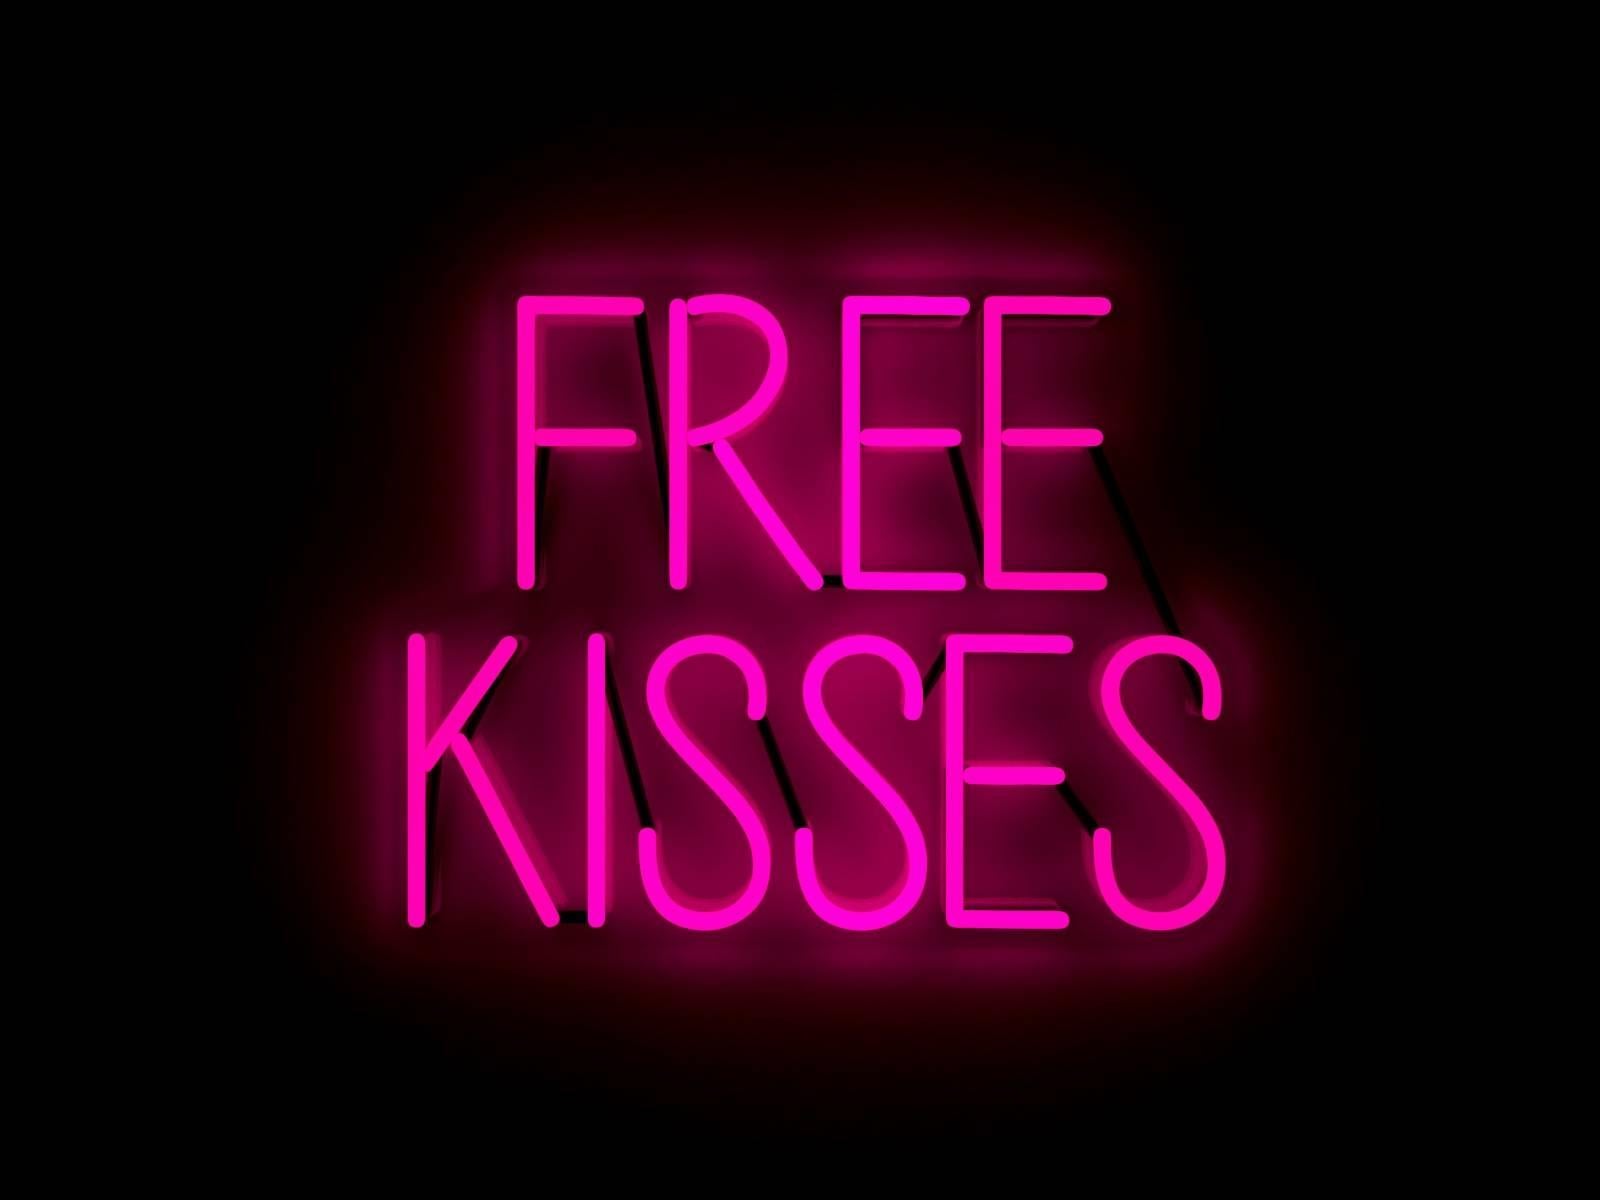 Free kisses - neon art work